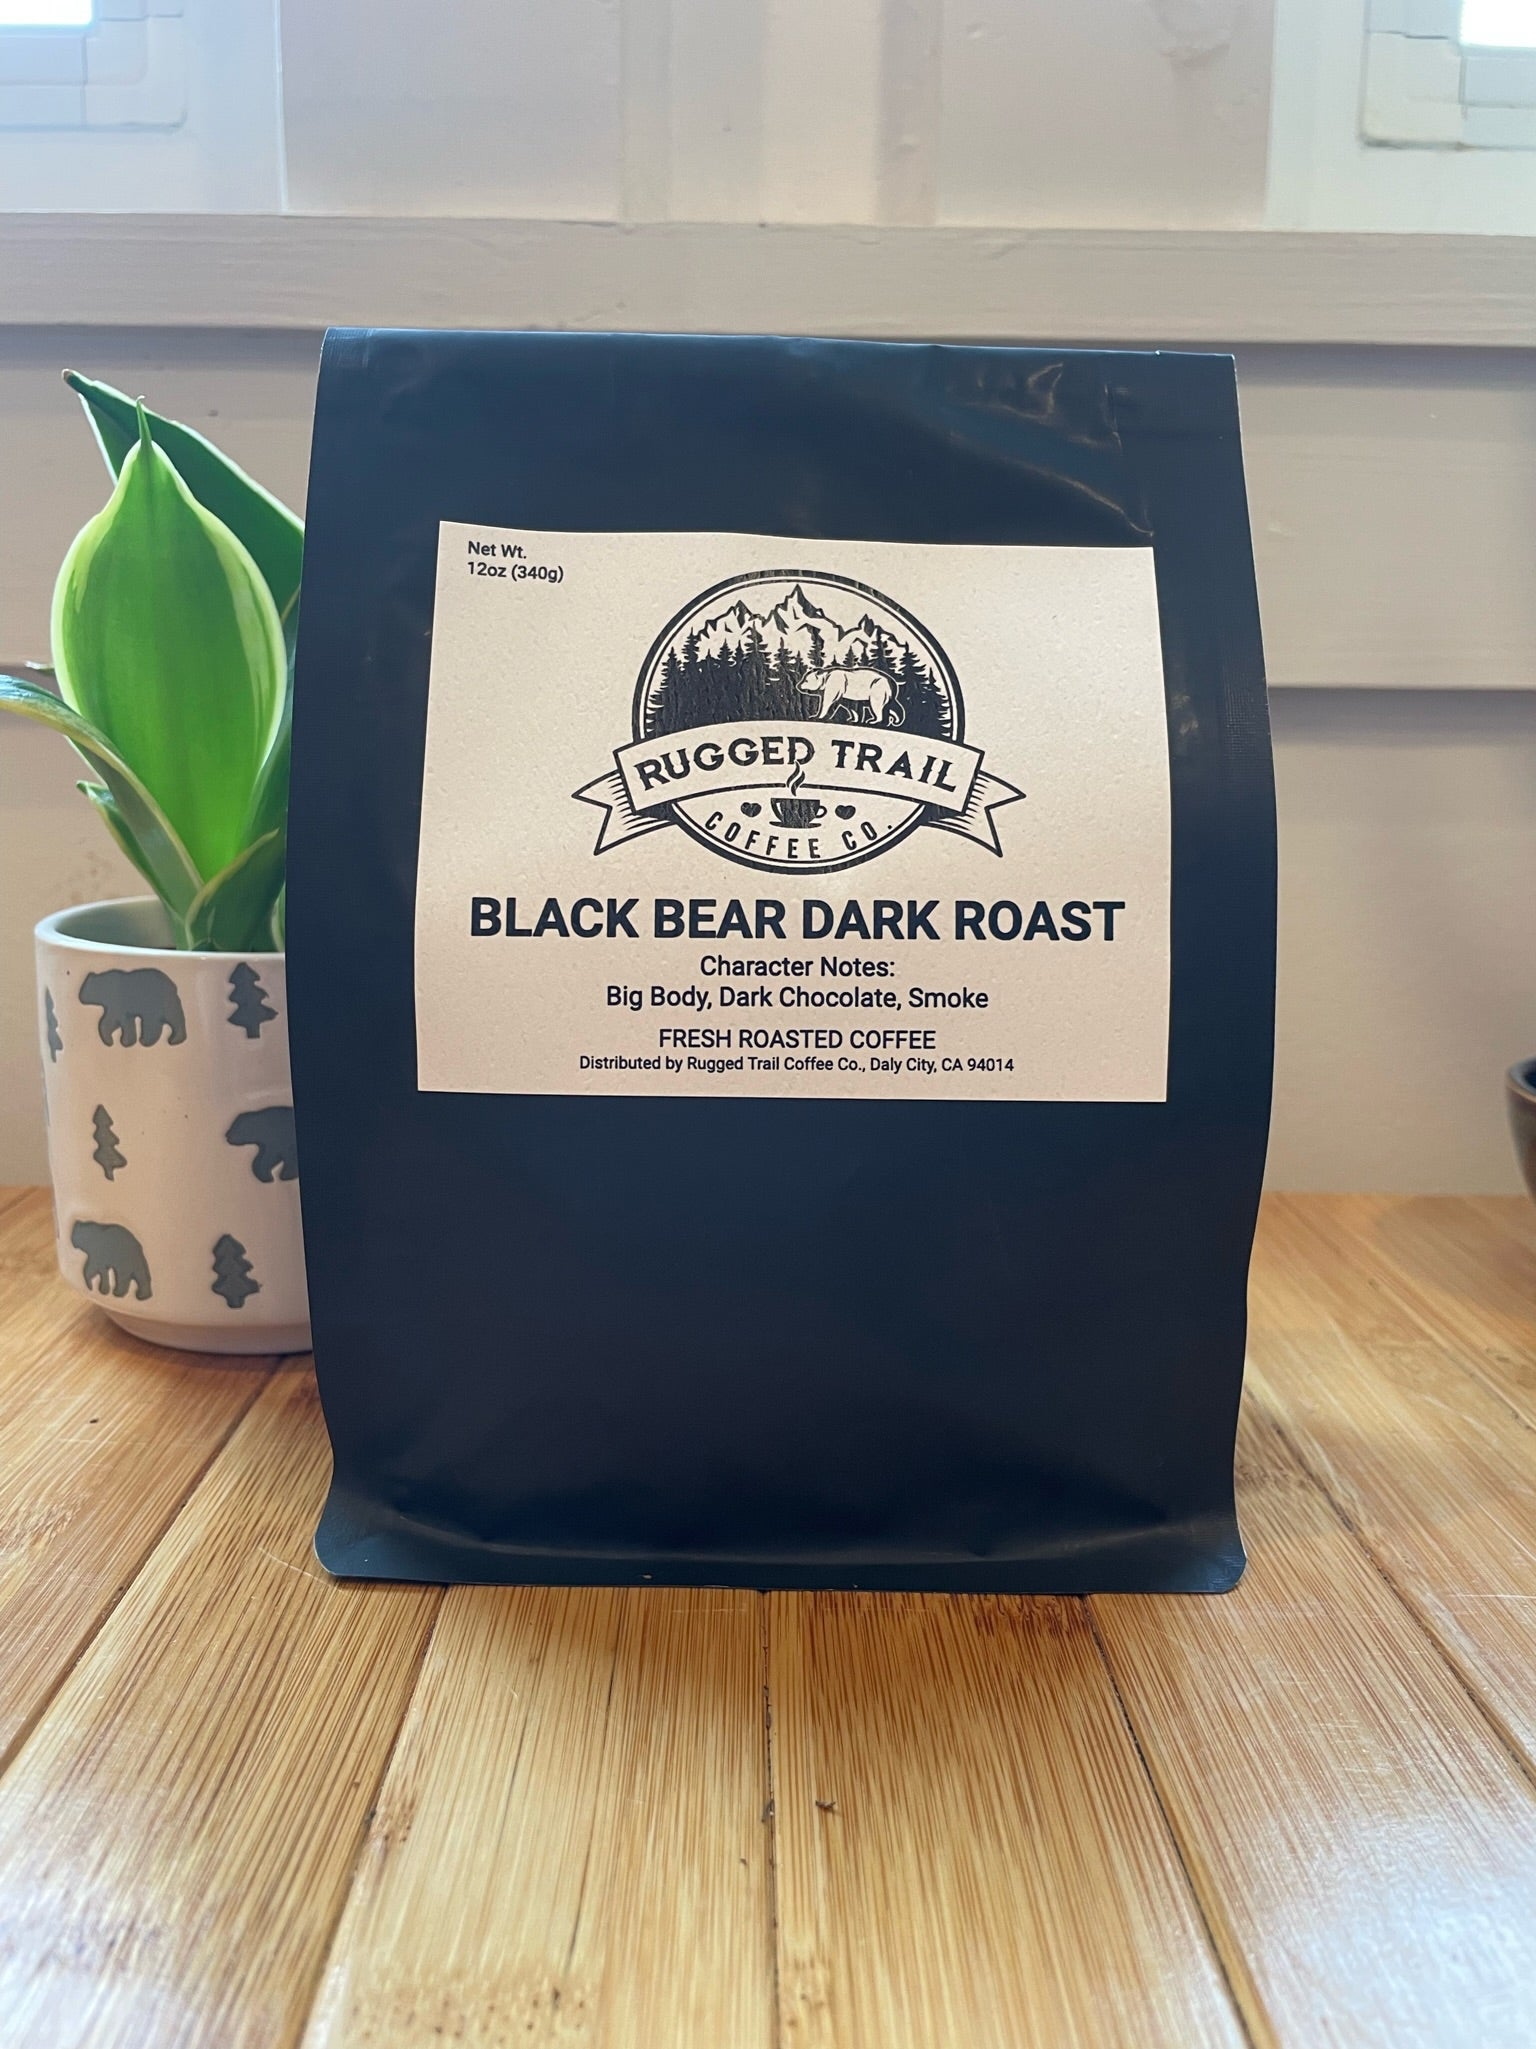 YETI | Black Bear Coffee Co